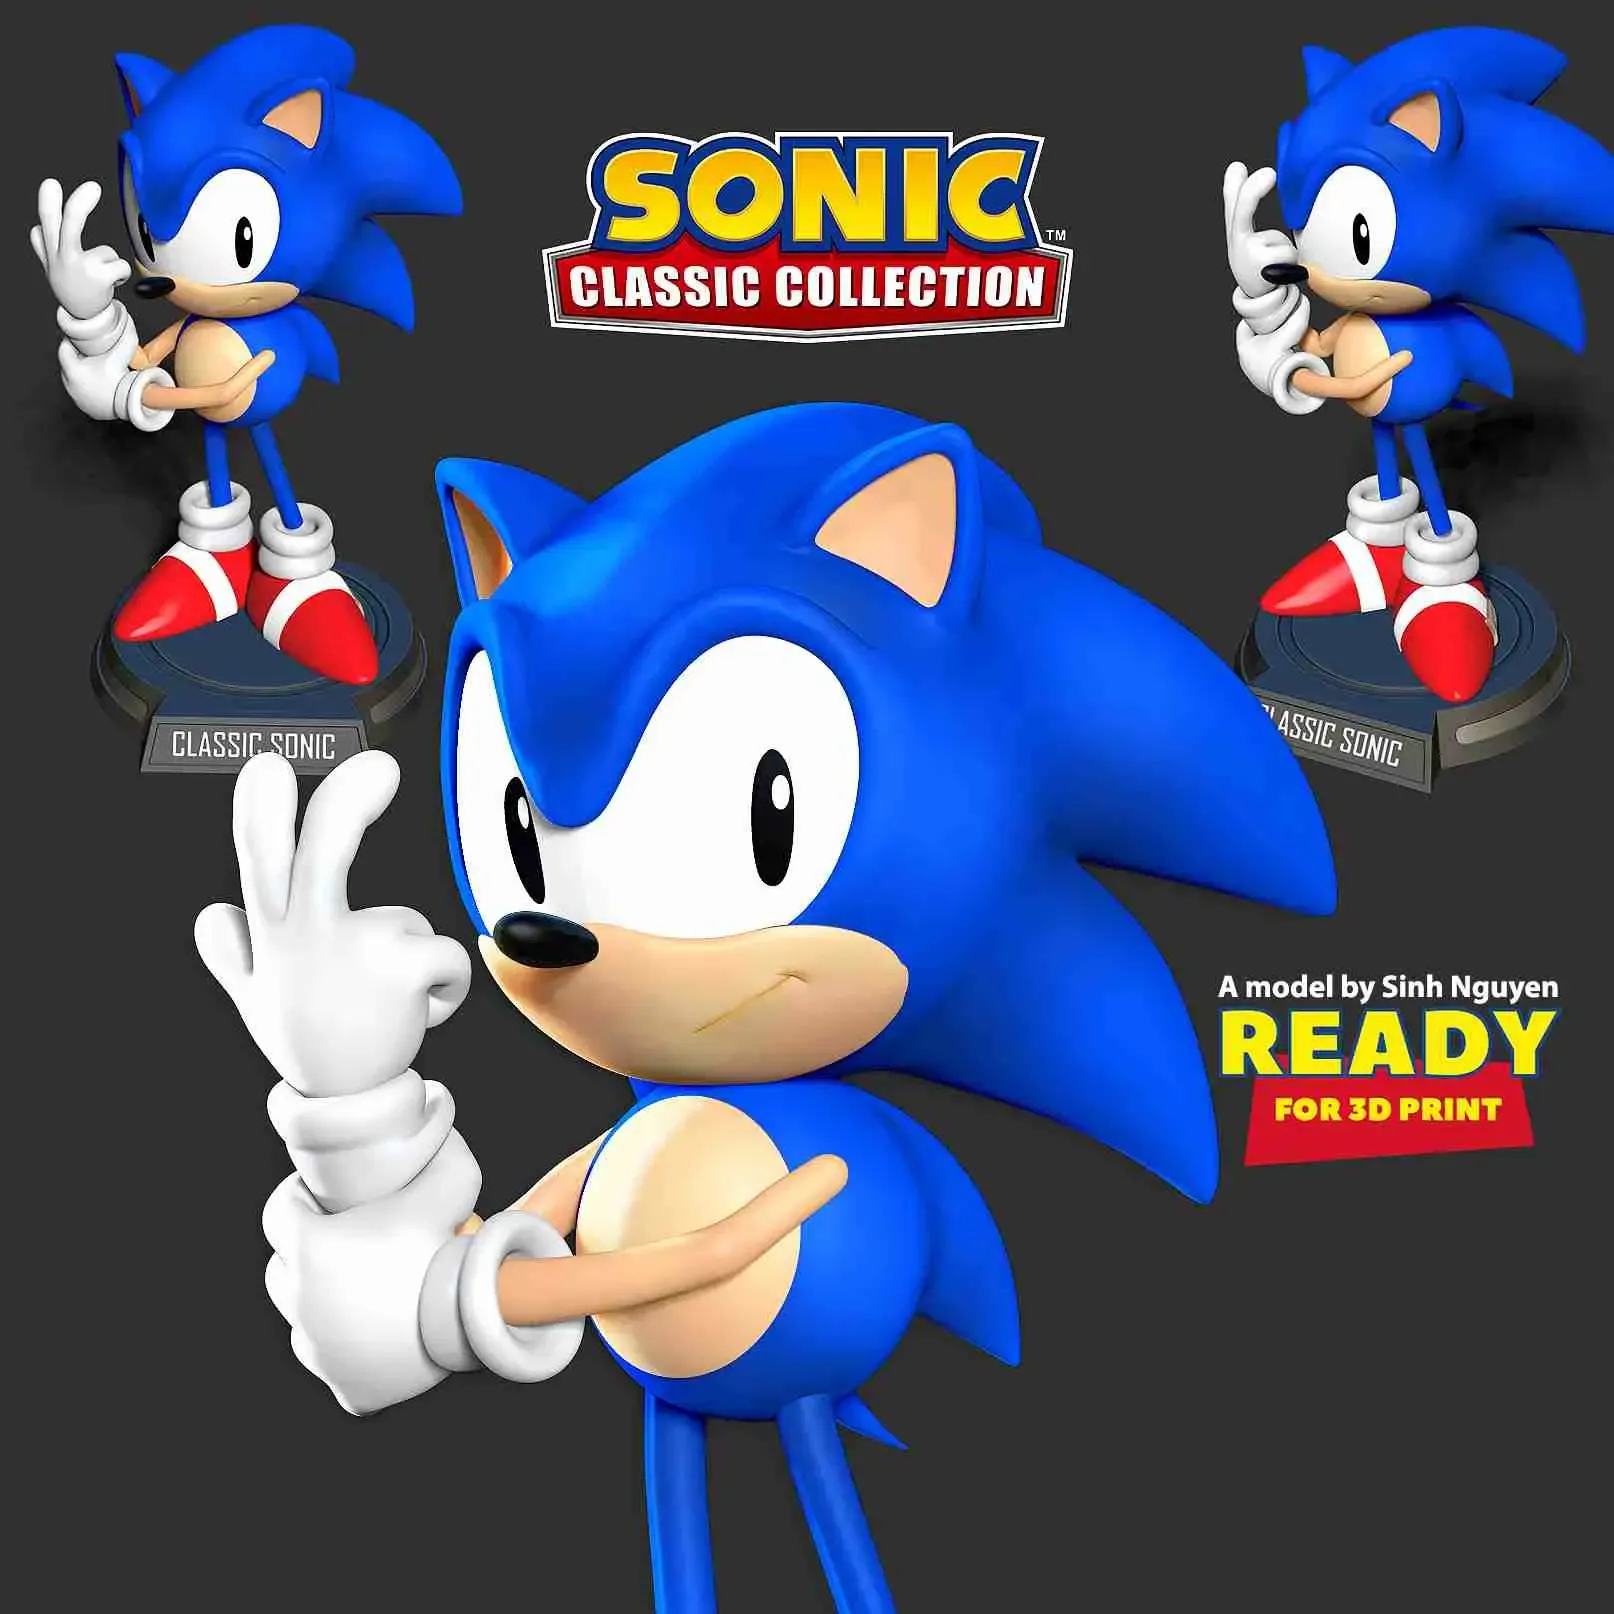 Classic Sonic the hedgehog